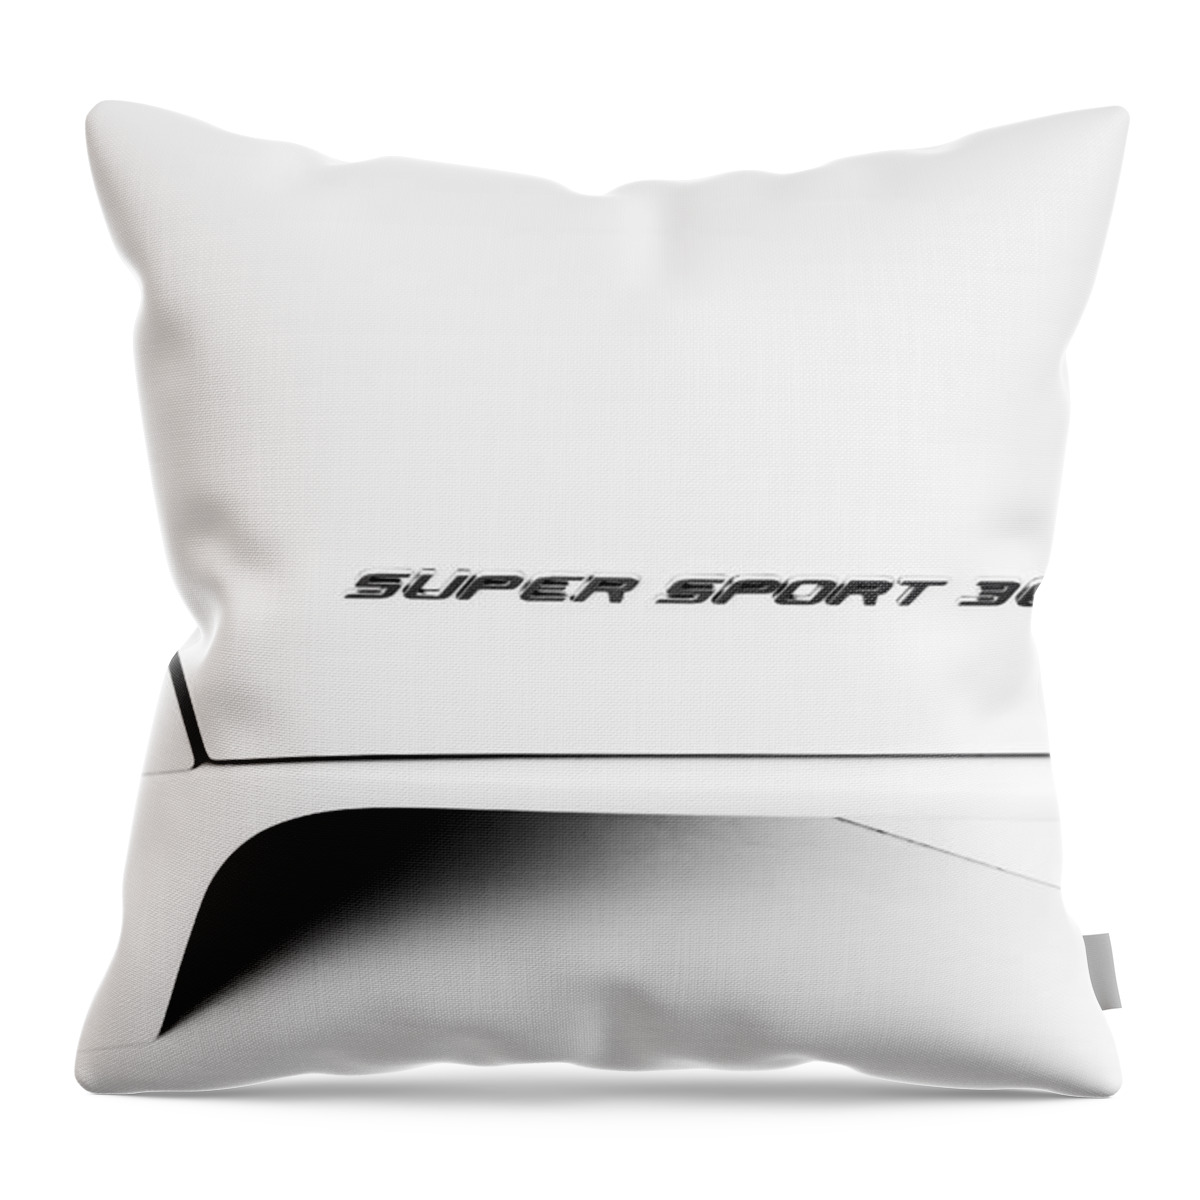 Bugatti Throw Pillow featuring the photograph Bugatti-Veyron, Super Sport 300 by Michael Hope